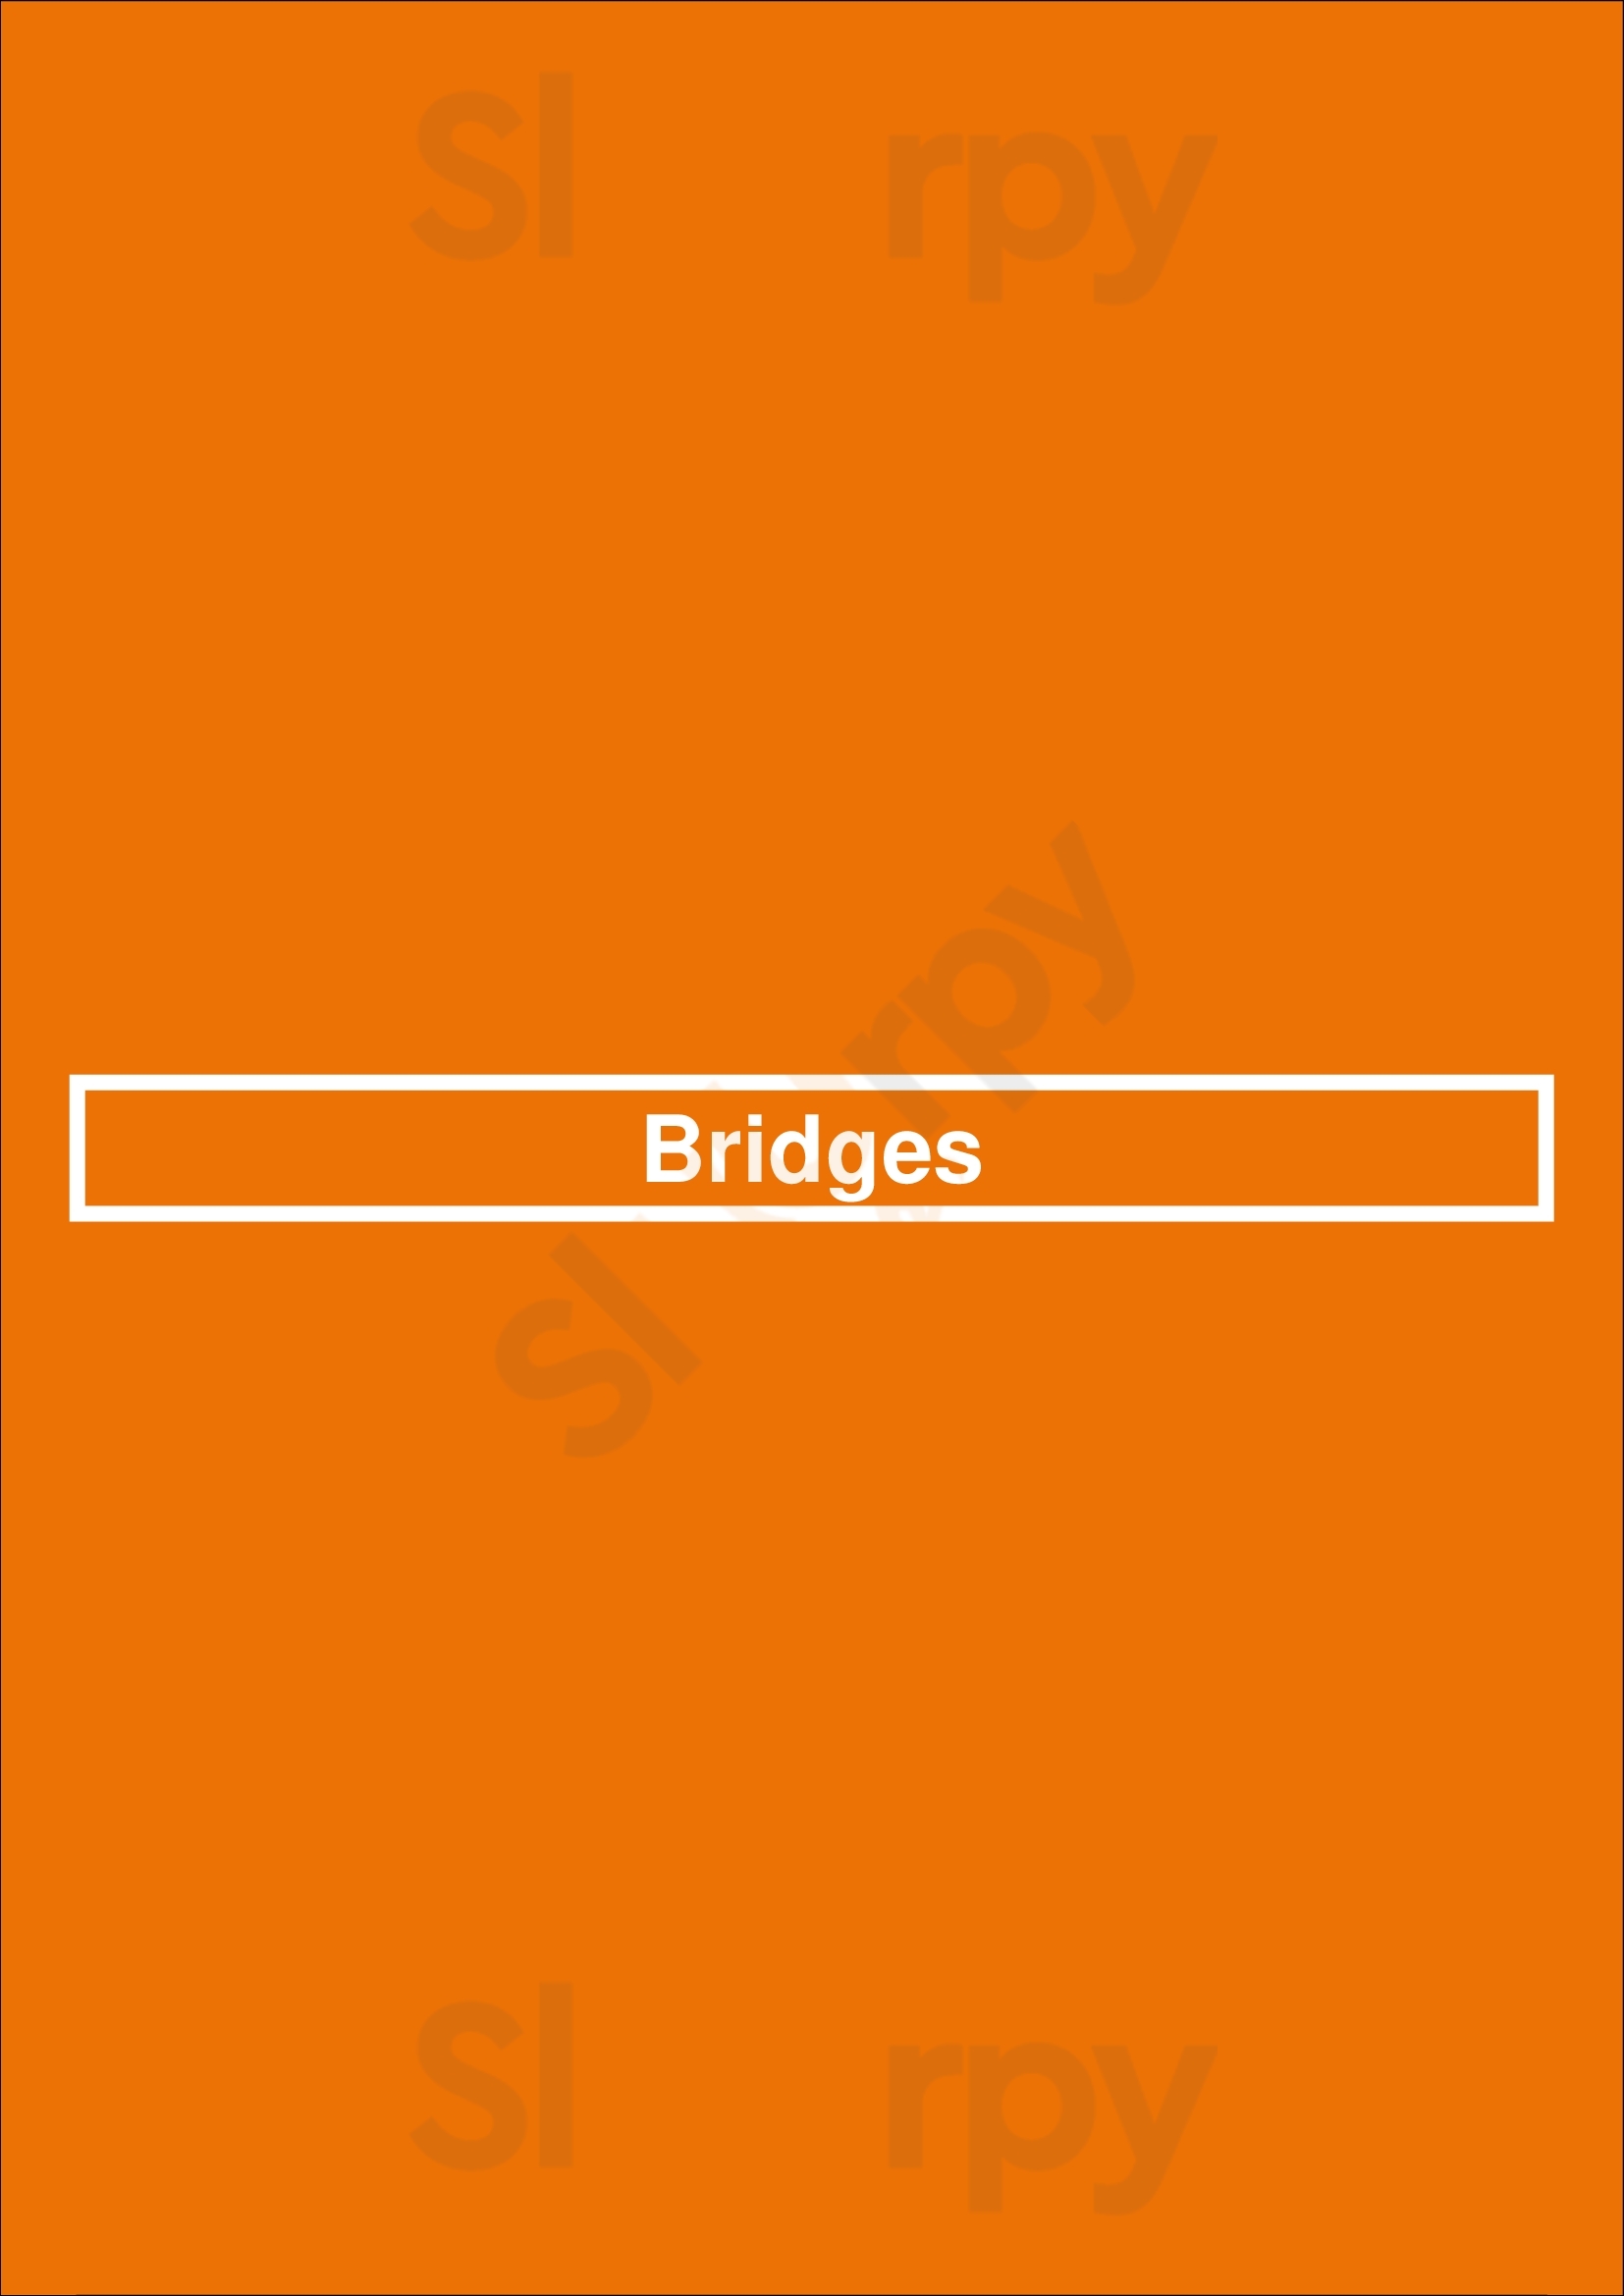 Bridges Amsterdam Menu - 1